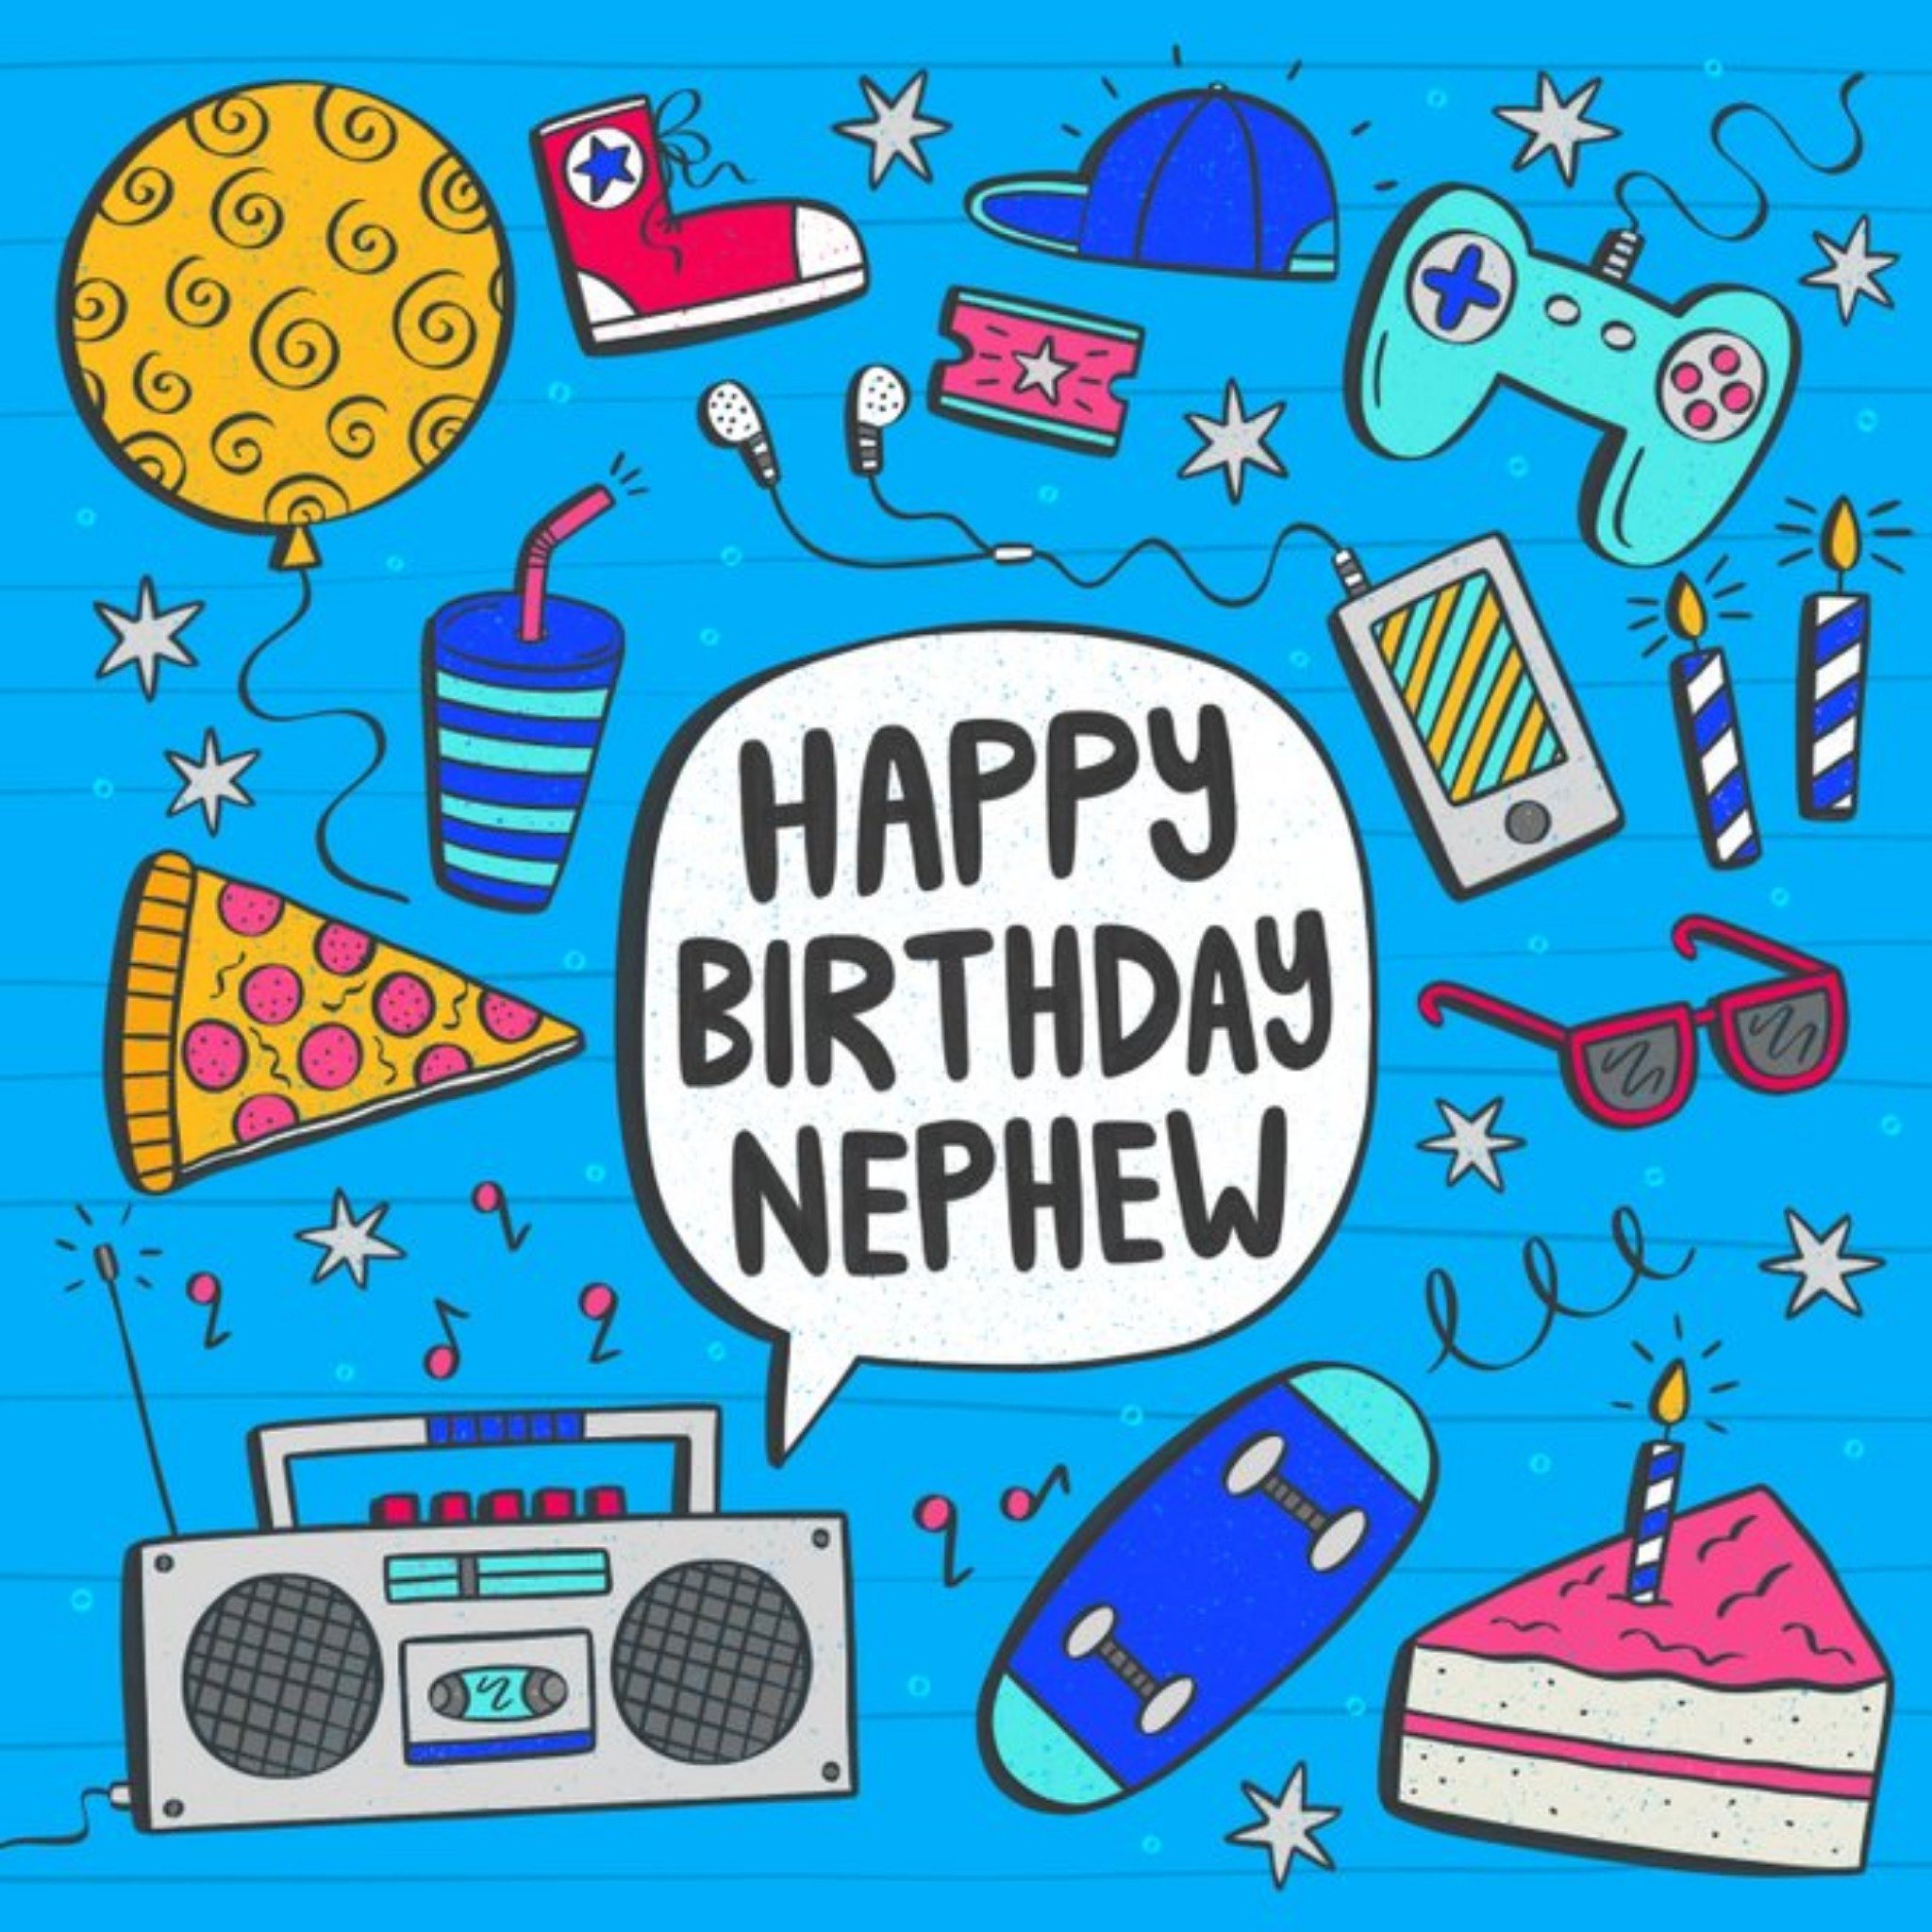 Moonpig Happy Birthday Nephew Doodle Hobbies Illustration Card, Large